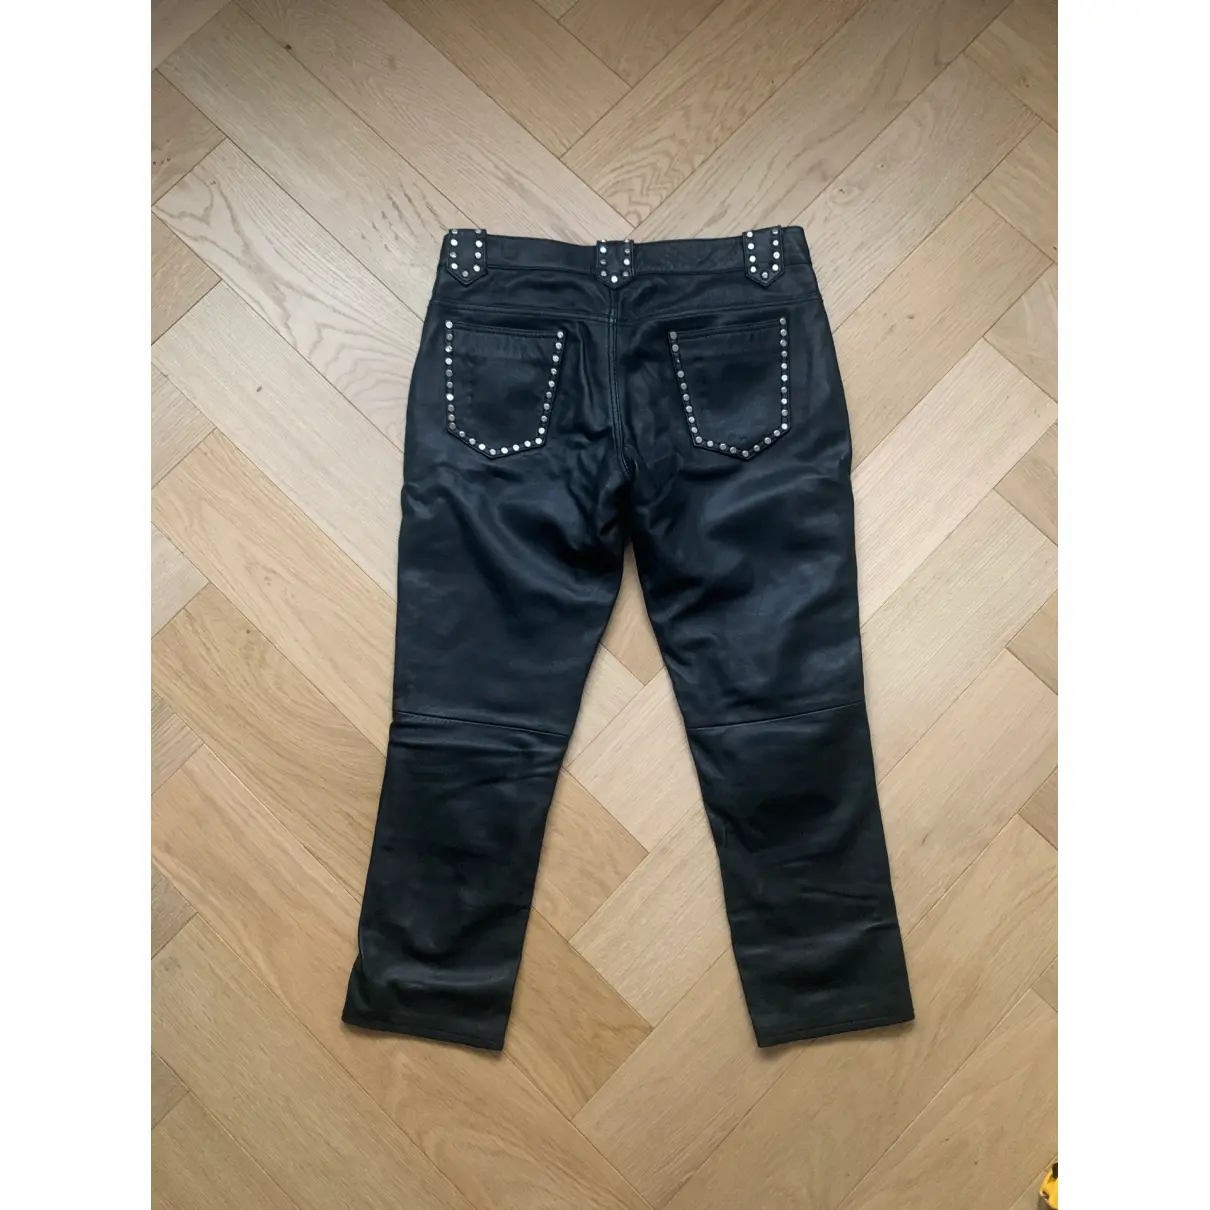 Buy Laurence Dolige Leather slim pants online